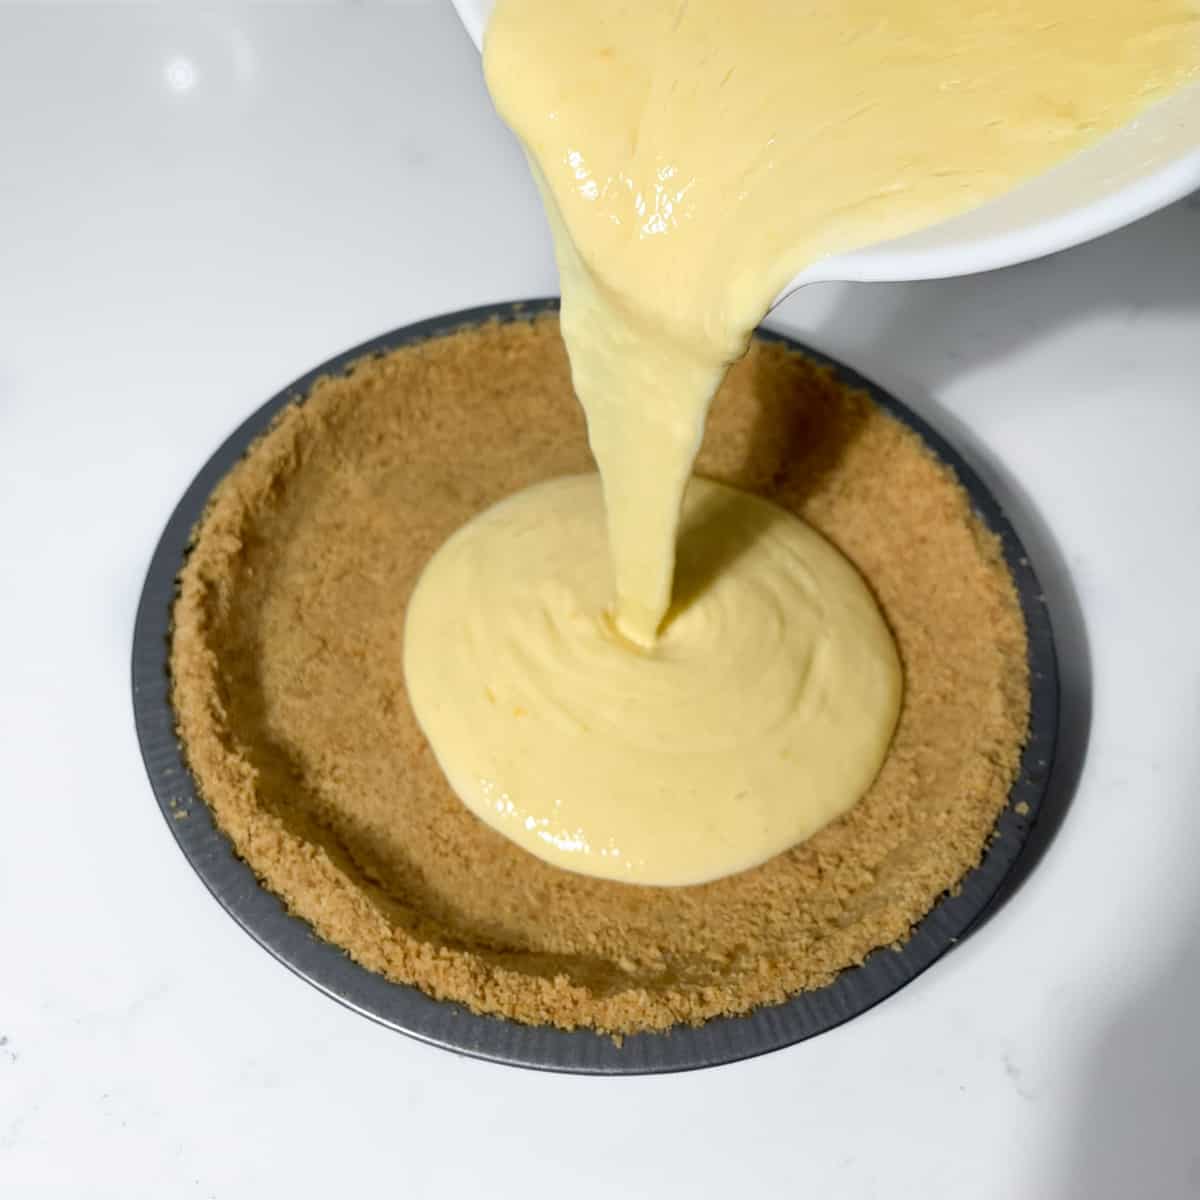 Pouring the lemon meringue filling into the pie base.